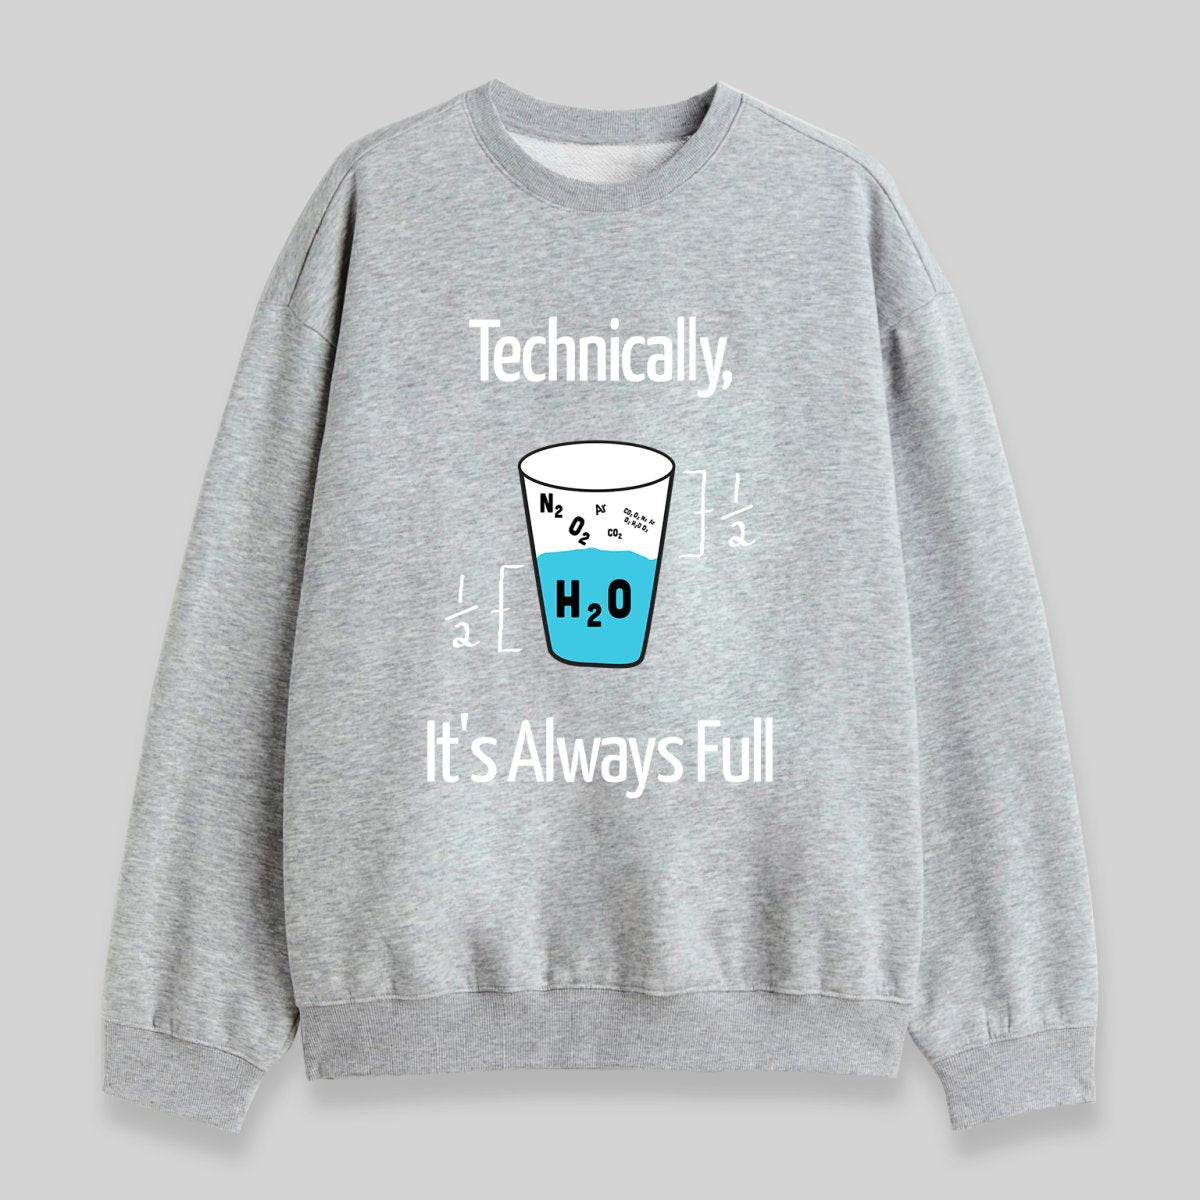 It's Always Full Sweatshirt - Geeksoutfit